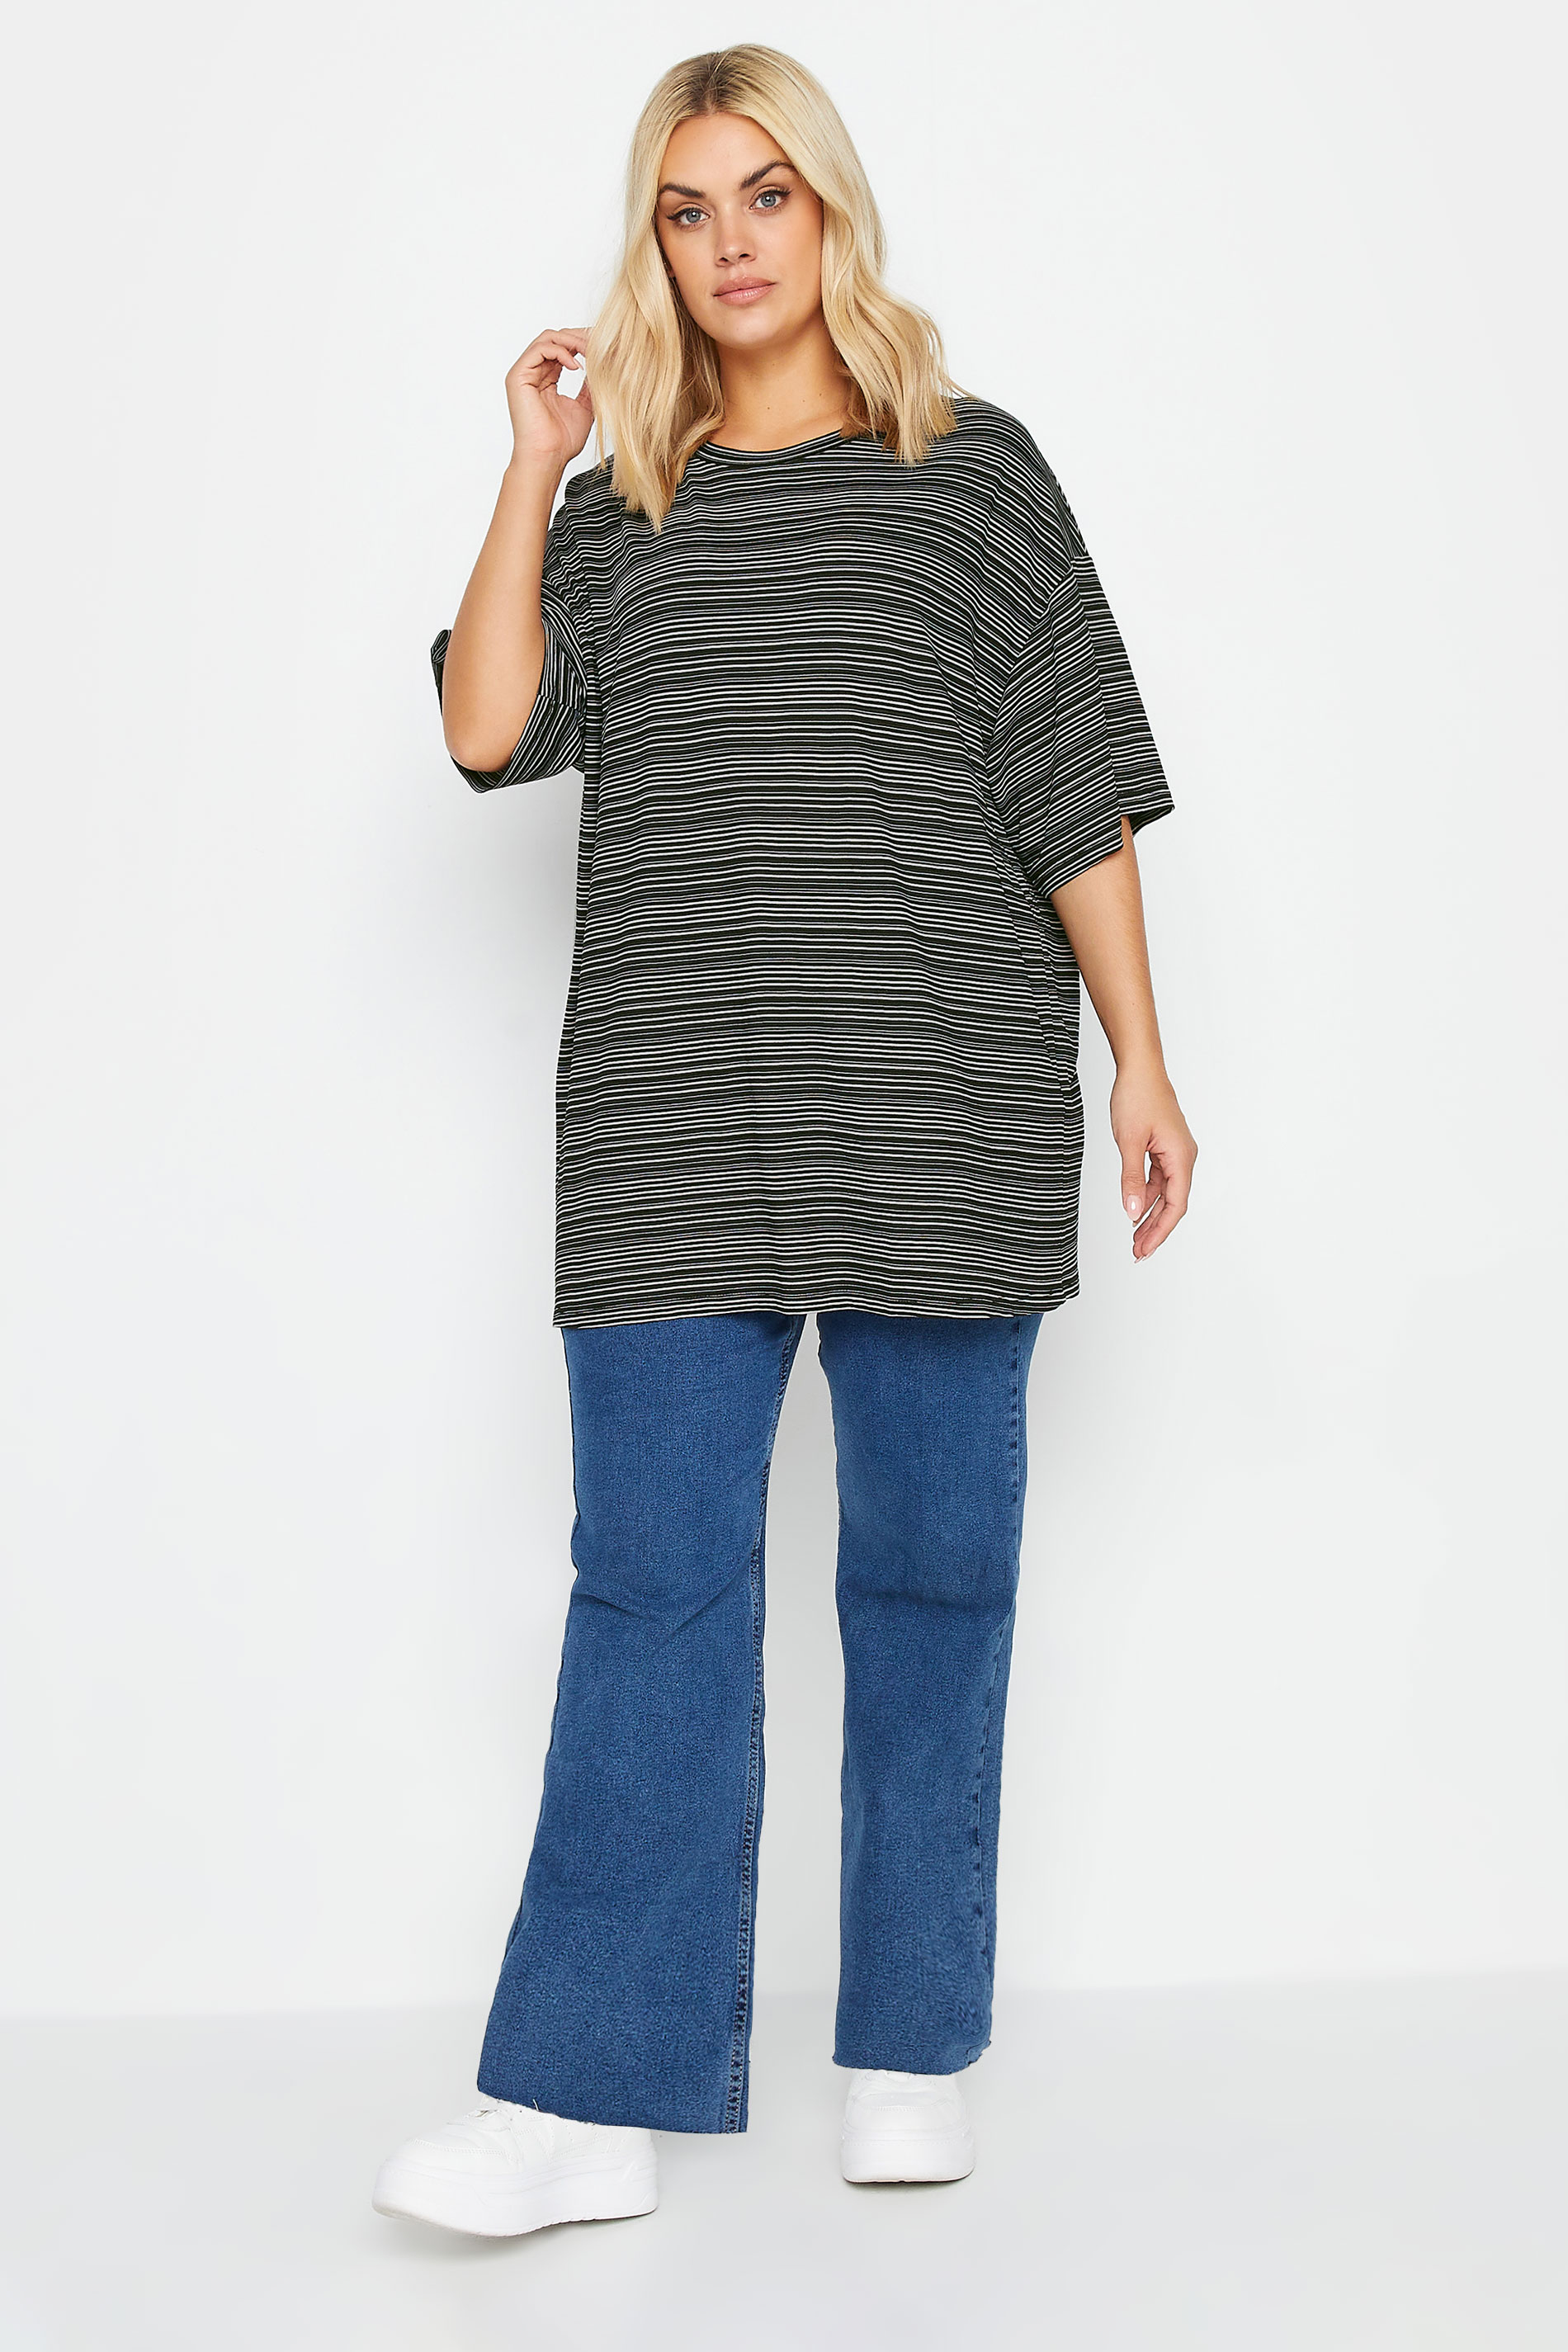 YOURS Plus Size Black Striped Oversized Boxy T-Shirt | Yours Clothing 2